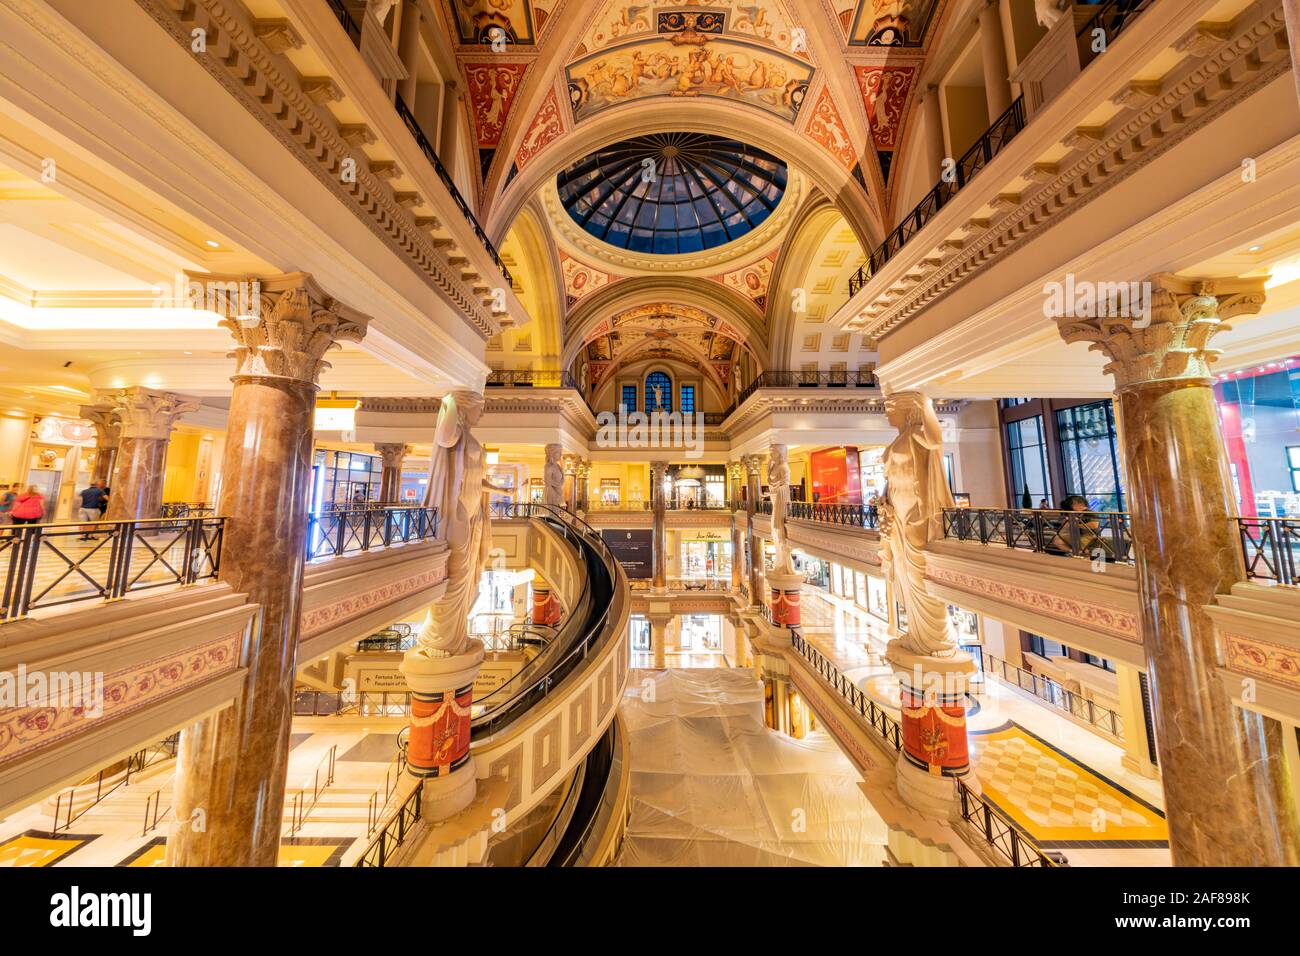 Las Vegas, SEP 25: Interior view of the The forum shops of Caesars Palace on SEP 25, 2019 at Las Vegas, Nevada Stock Photo